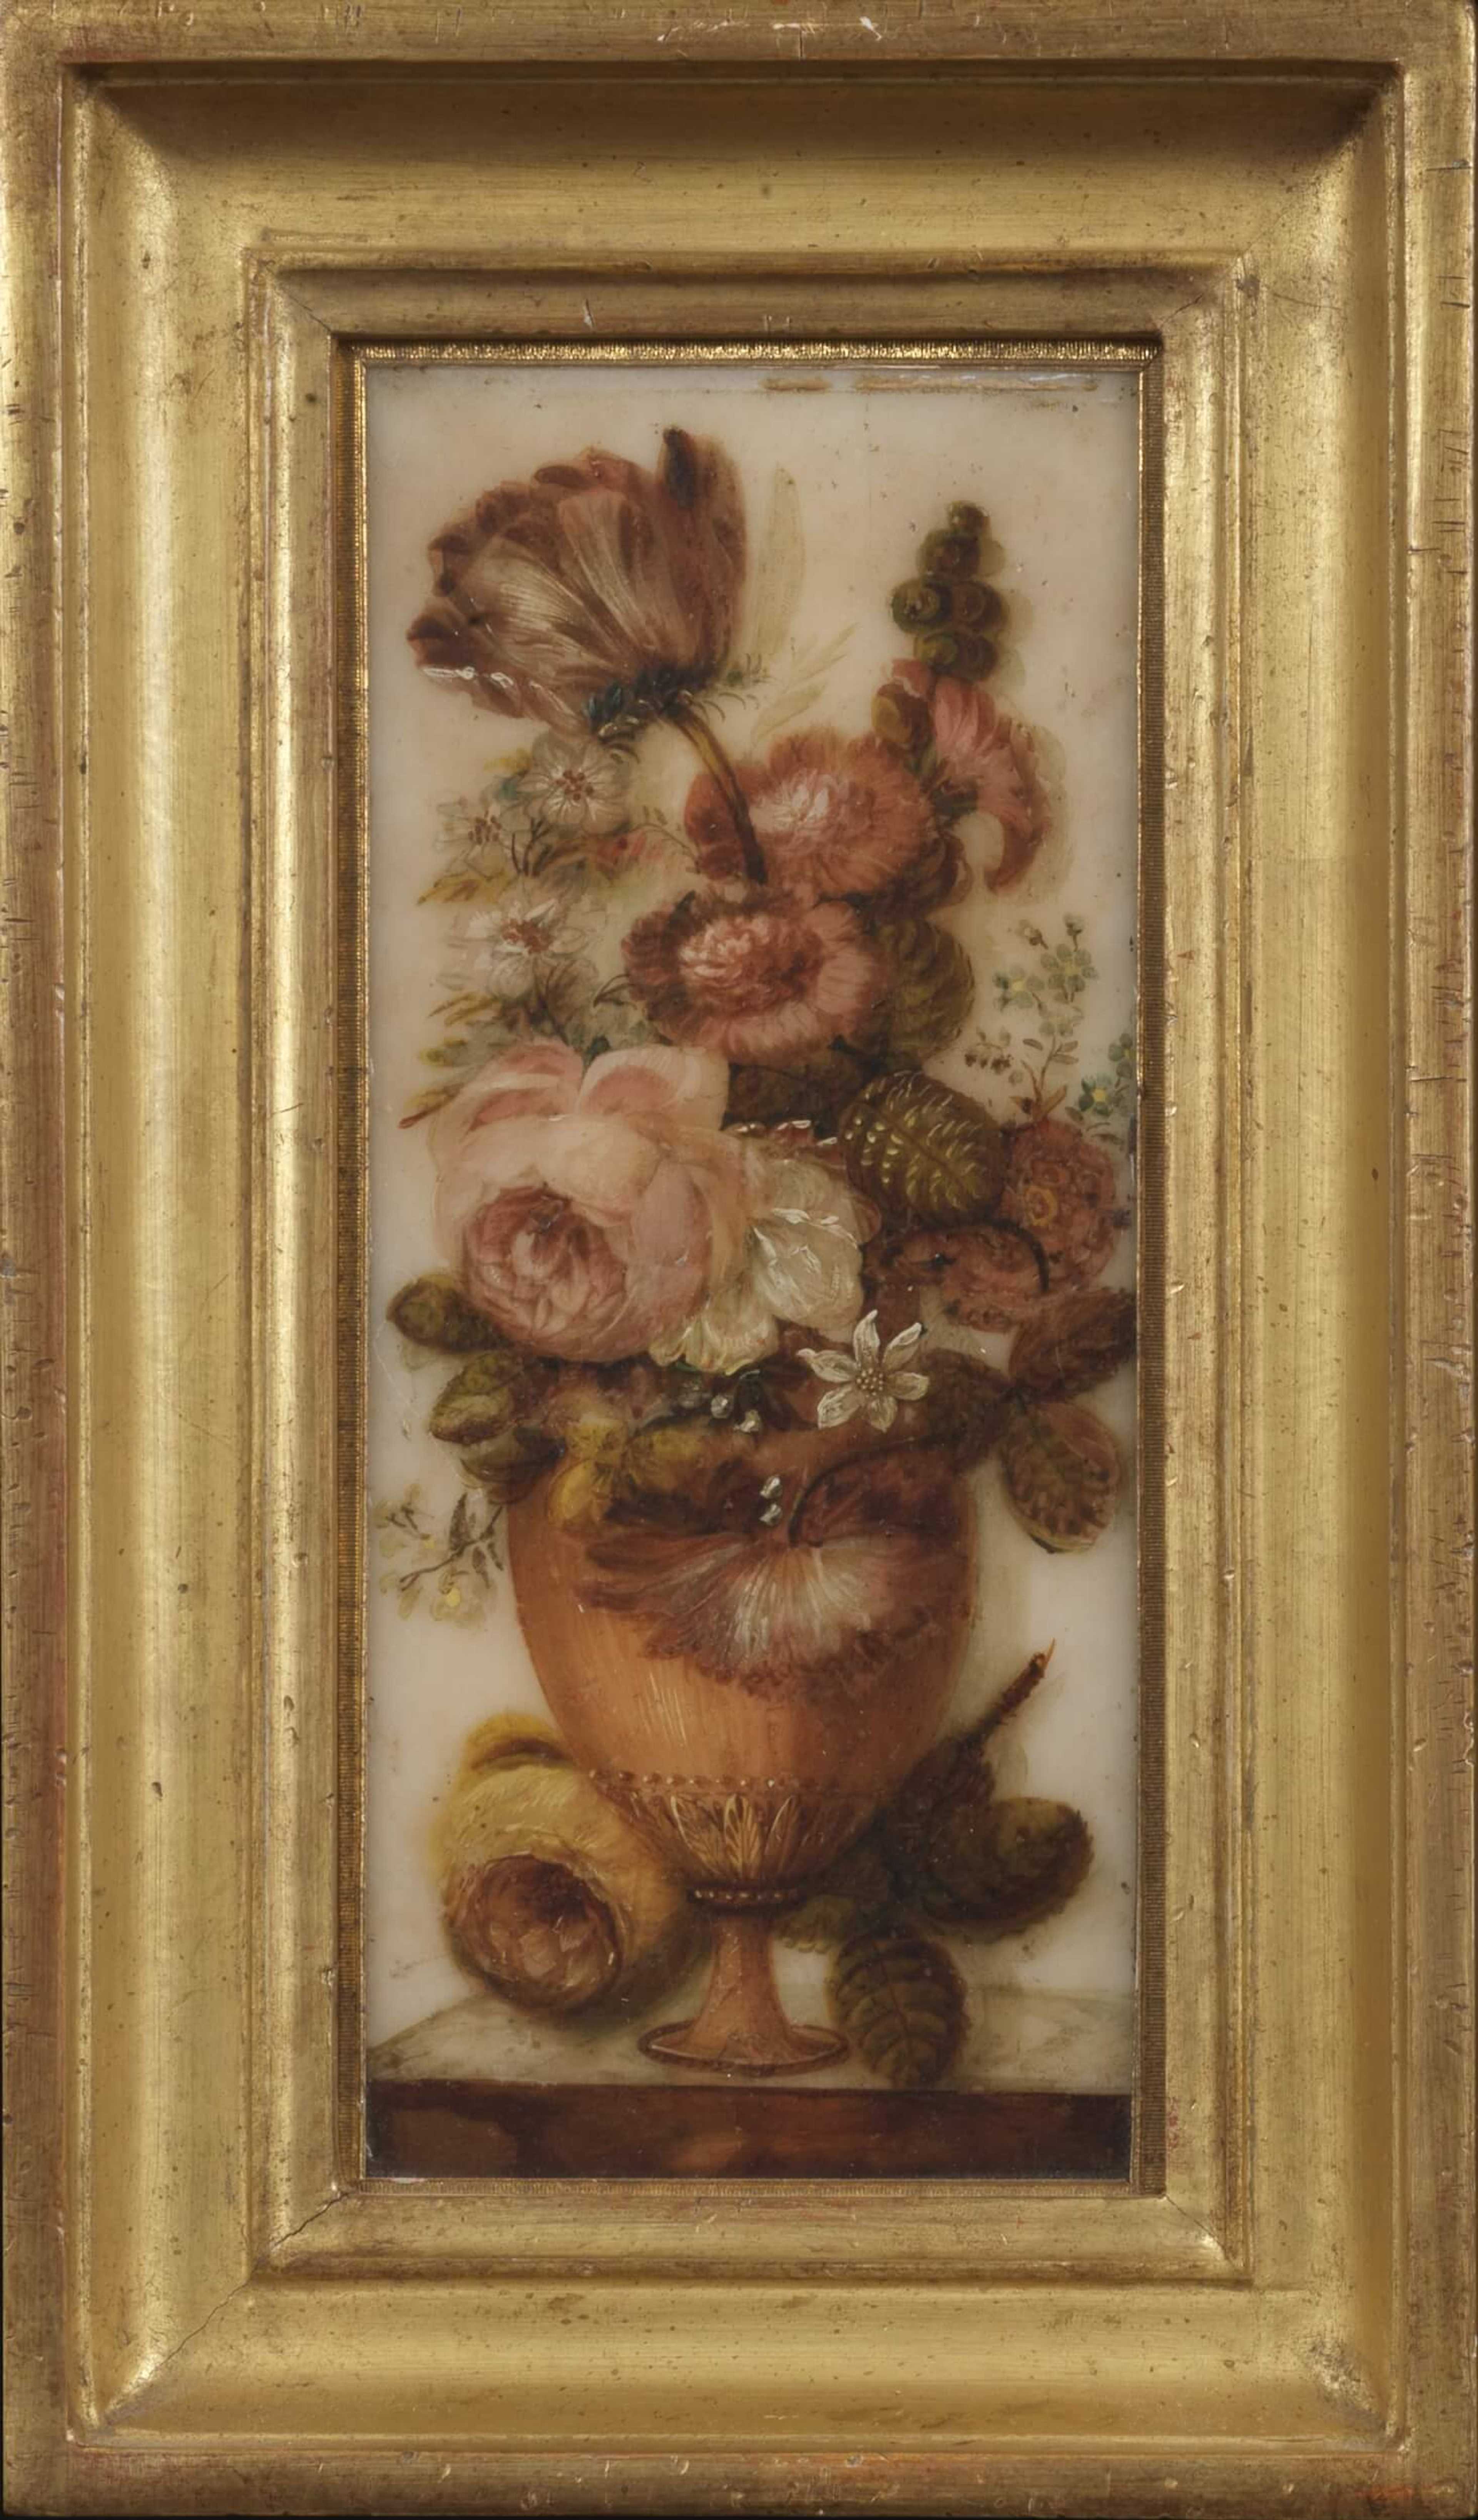 Vases with anemones, convolvulus jasmine and others